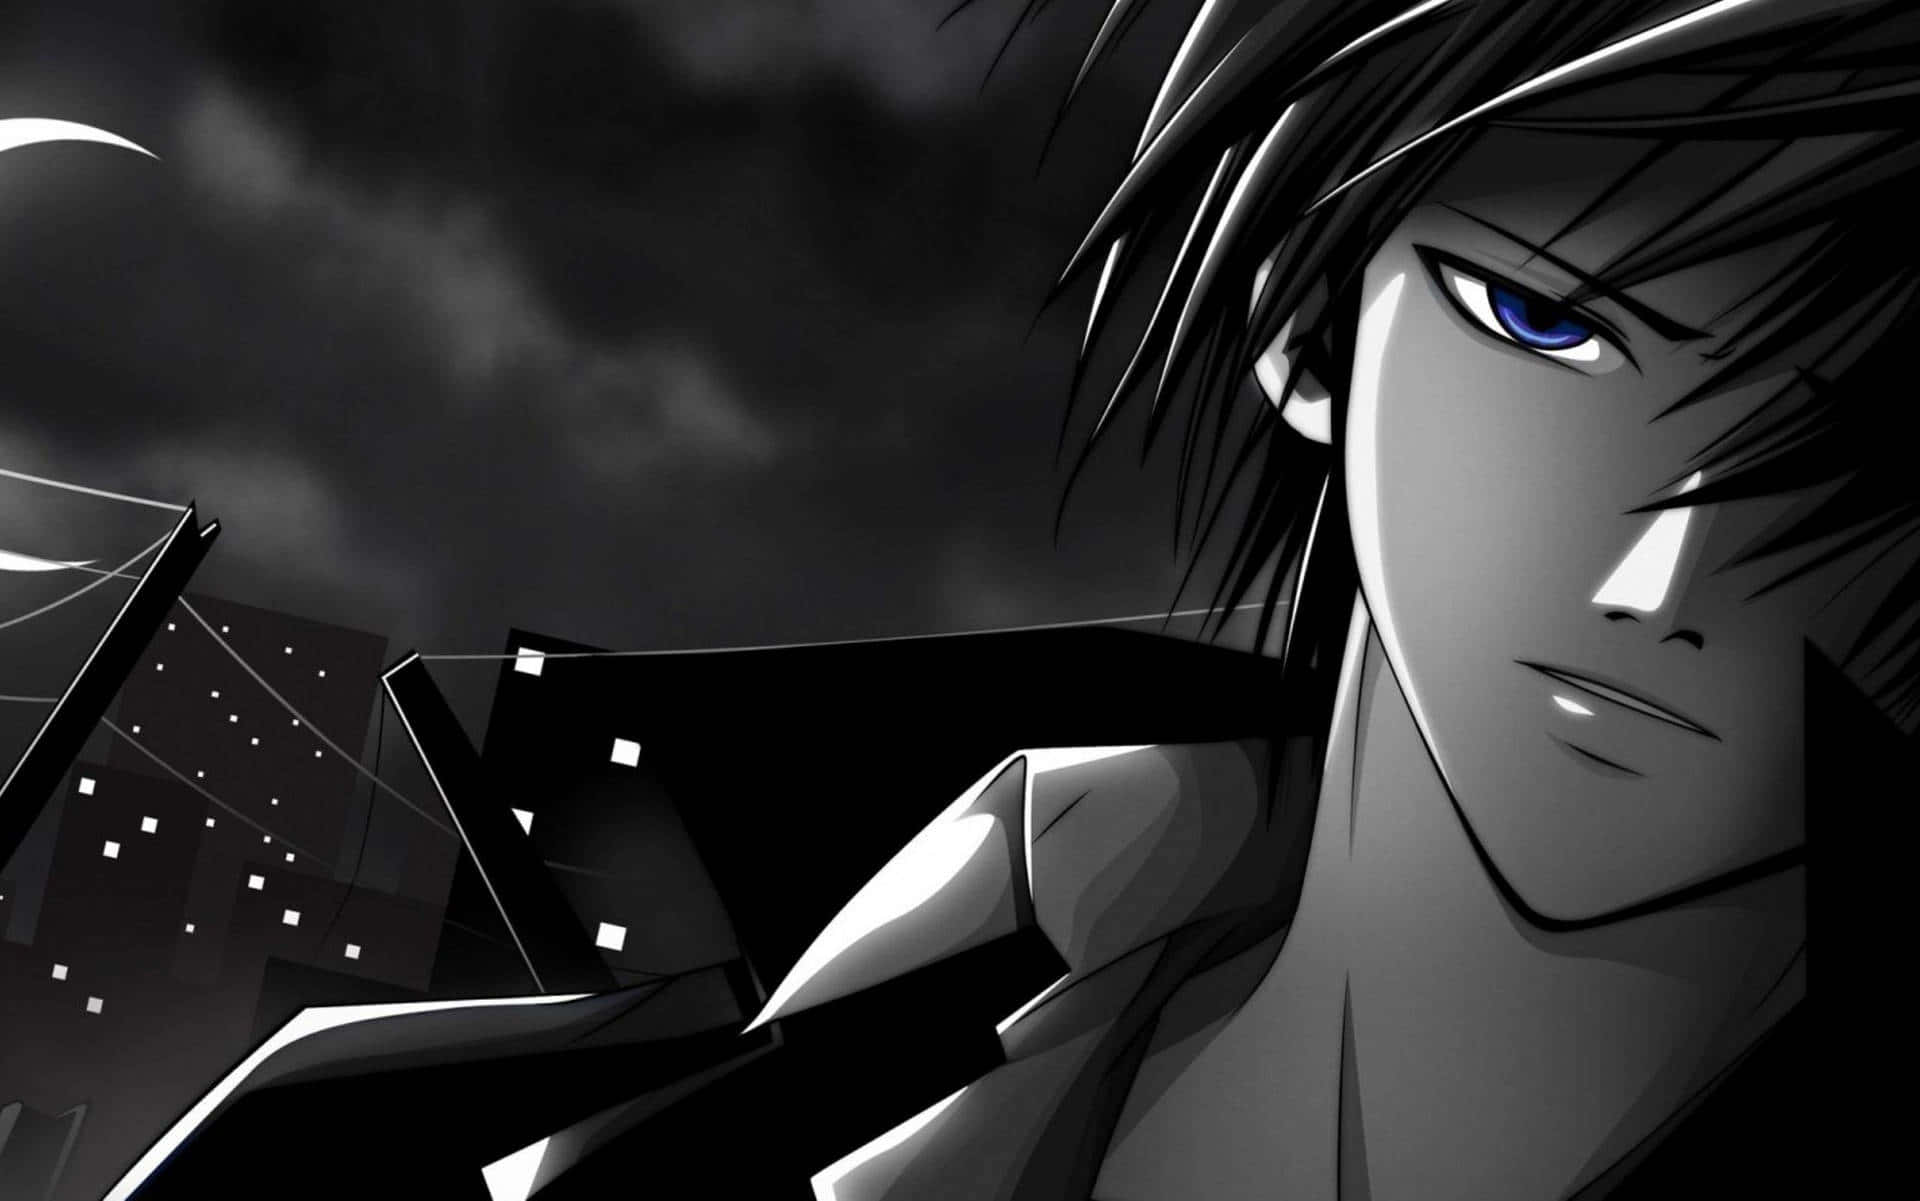 Personajede Anime Con Ojos Azules Y Cabello Negro